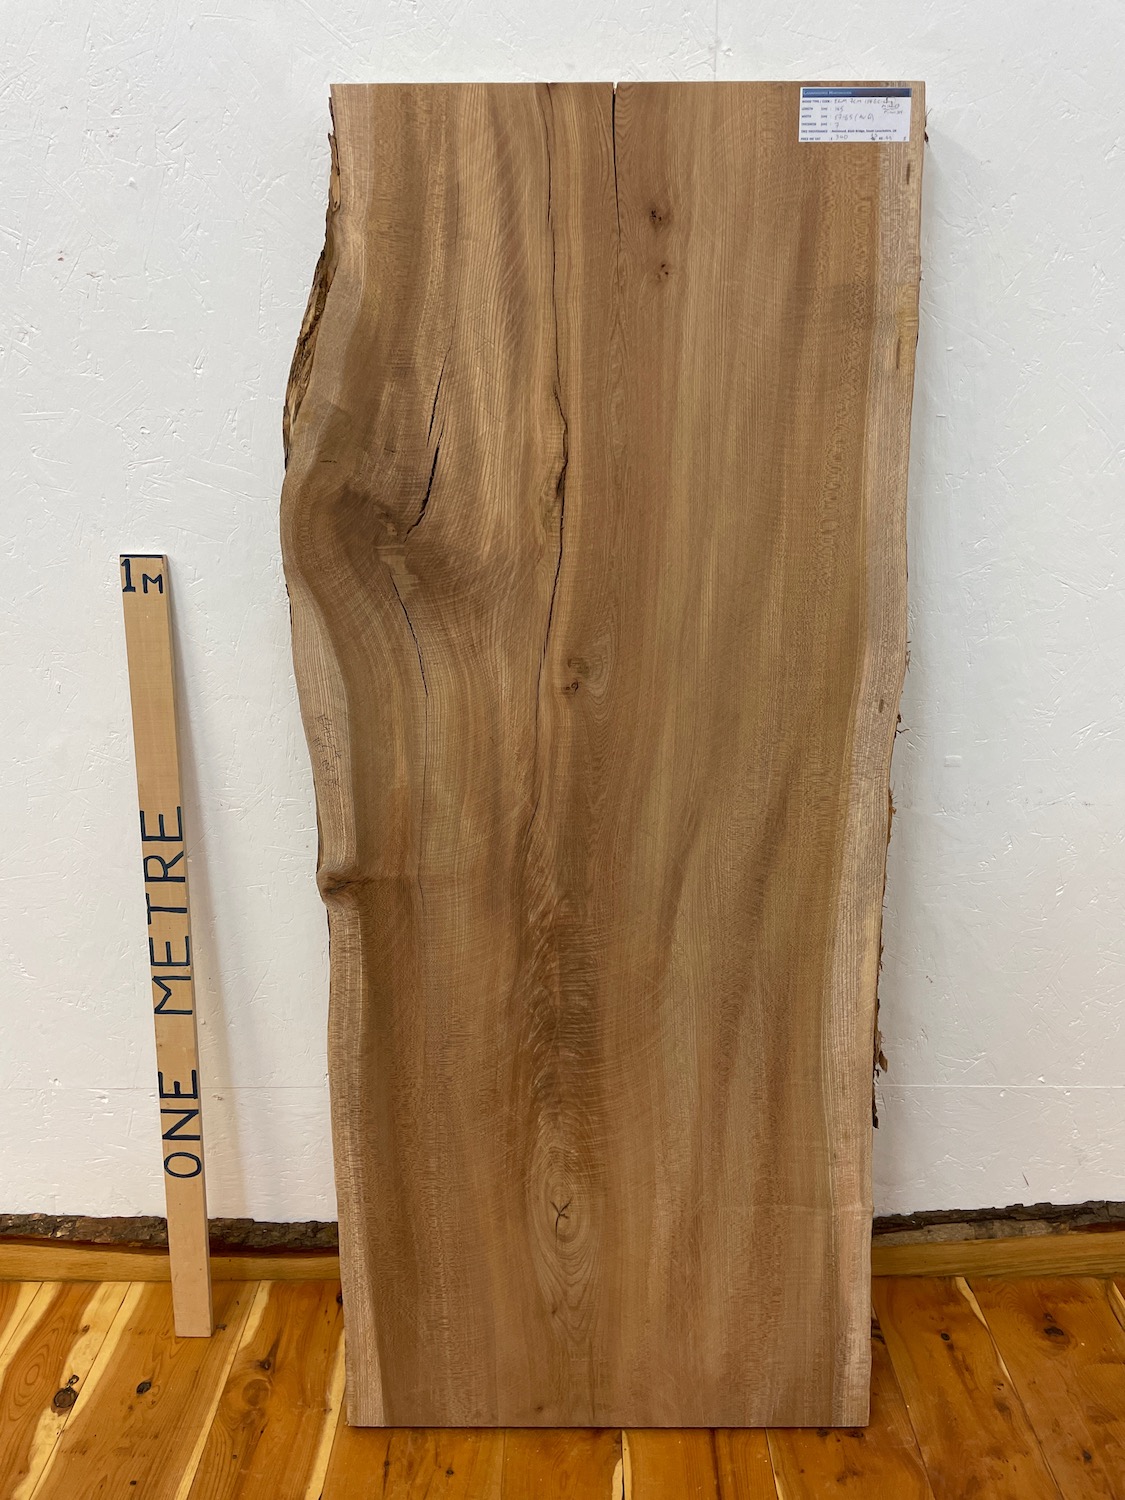 ELM Natural Waney Edge Slab Milled Finish Hardwood Board 1546C-4 Thickness 7cm Kiln Dried Seasoned Wildwood Live Edge Tabletops CoffeeTableTops